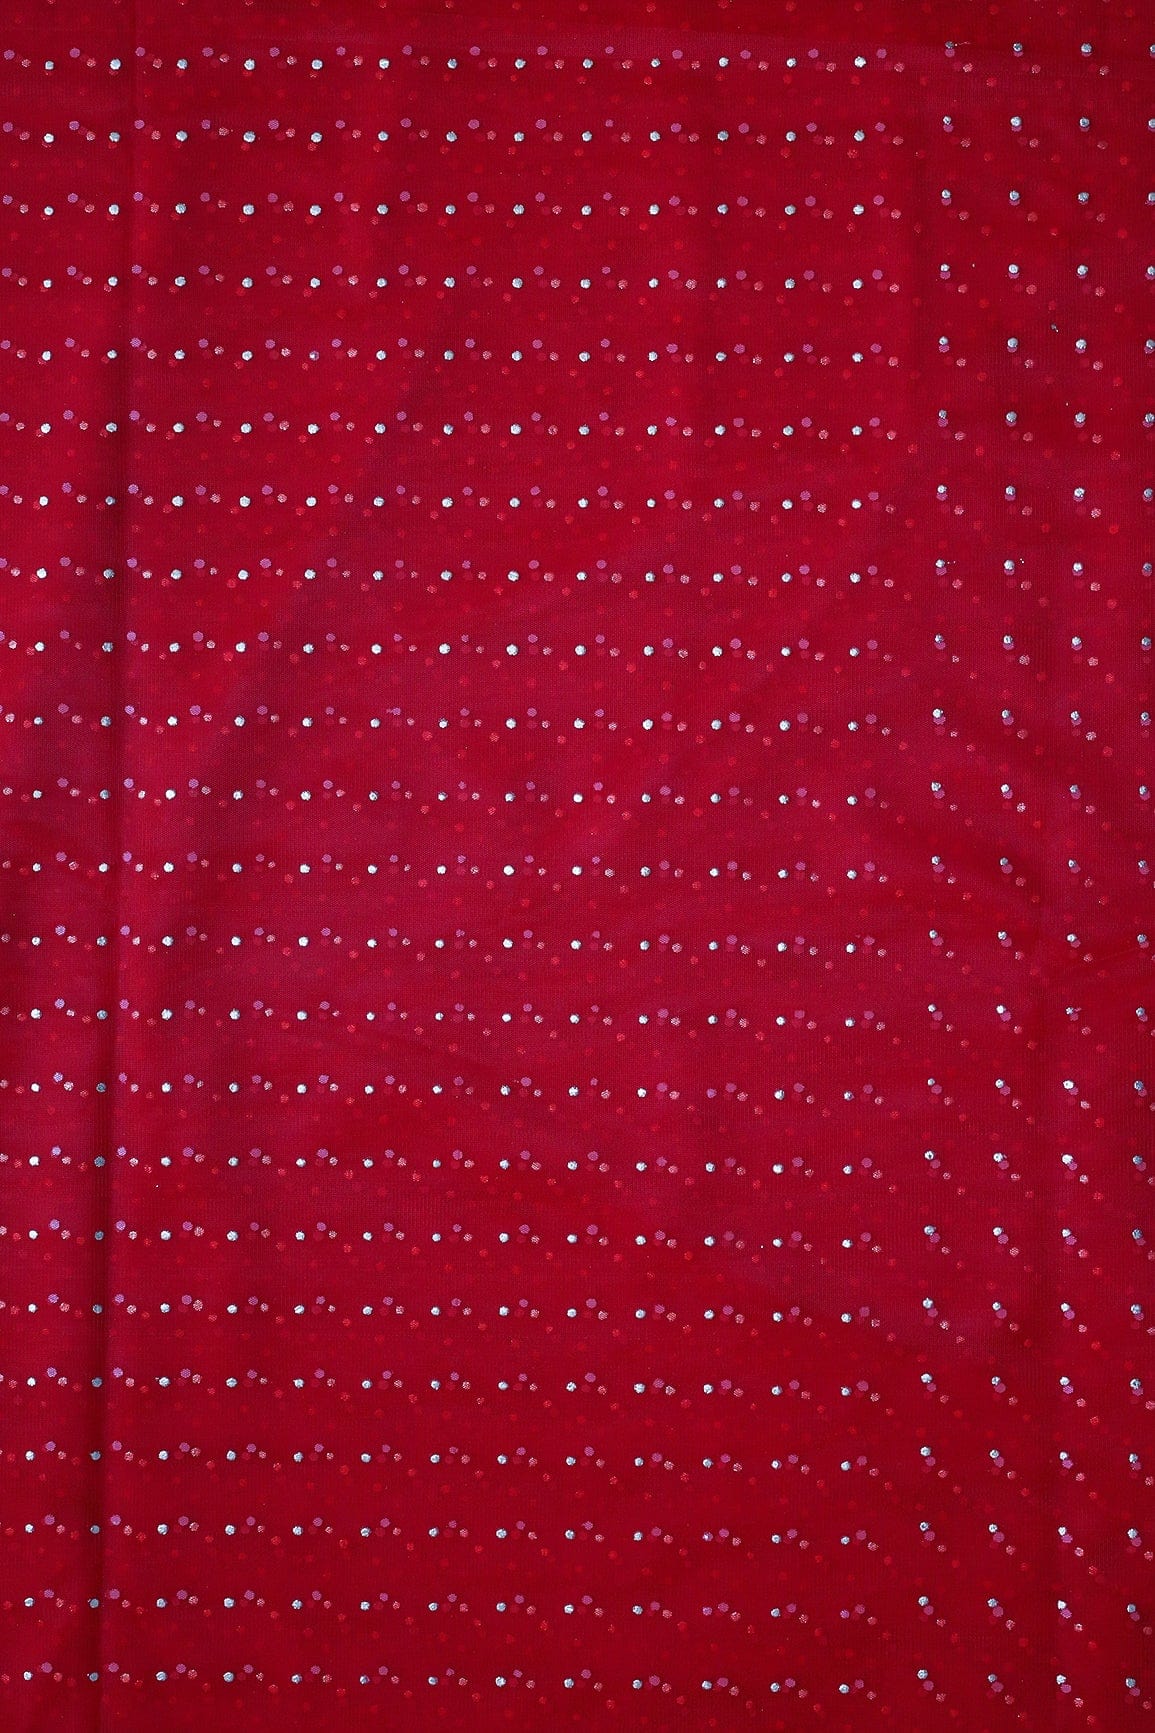 doeraa Embroidery Fabrics Red Golden Dew Drops Soft Net Fabric